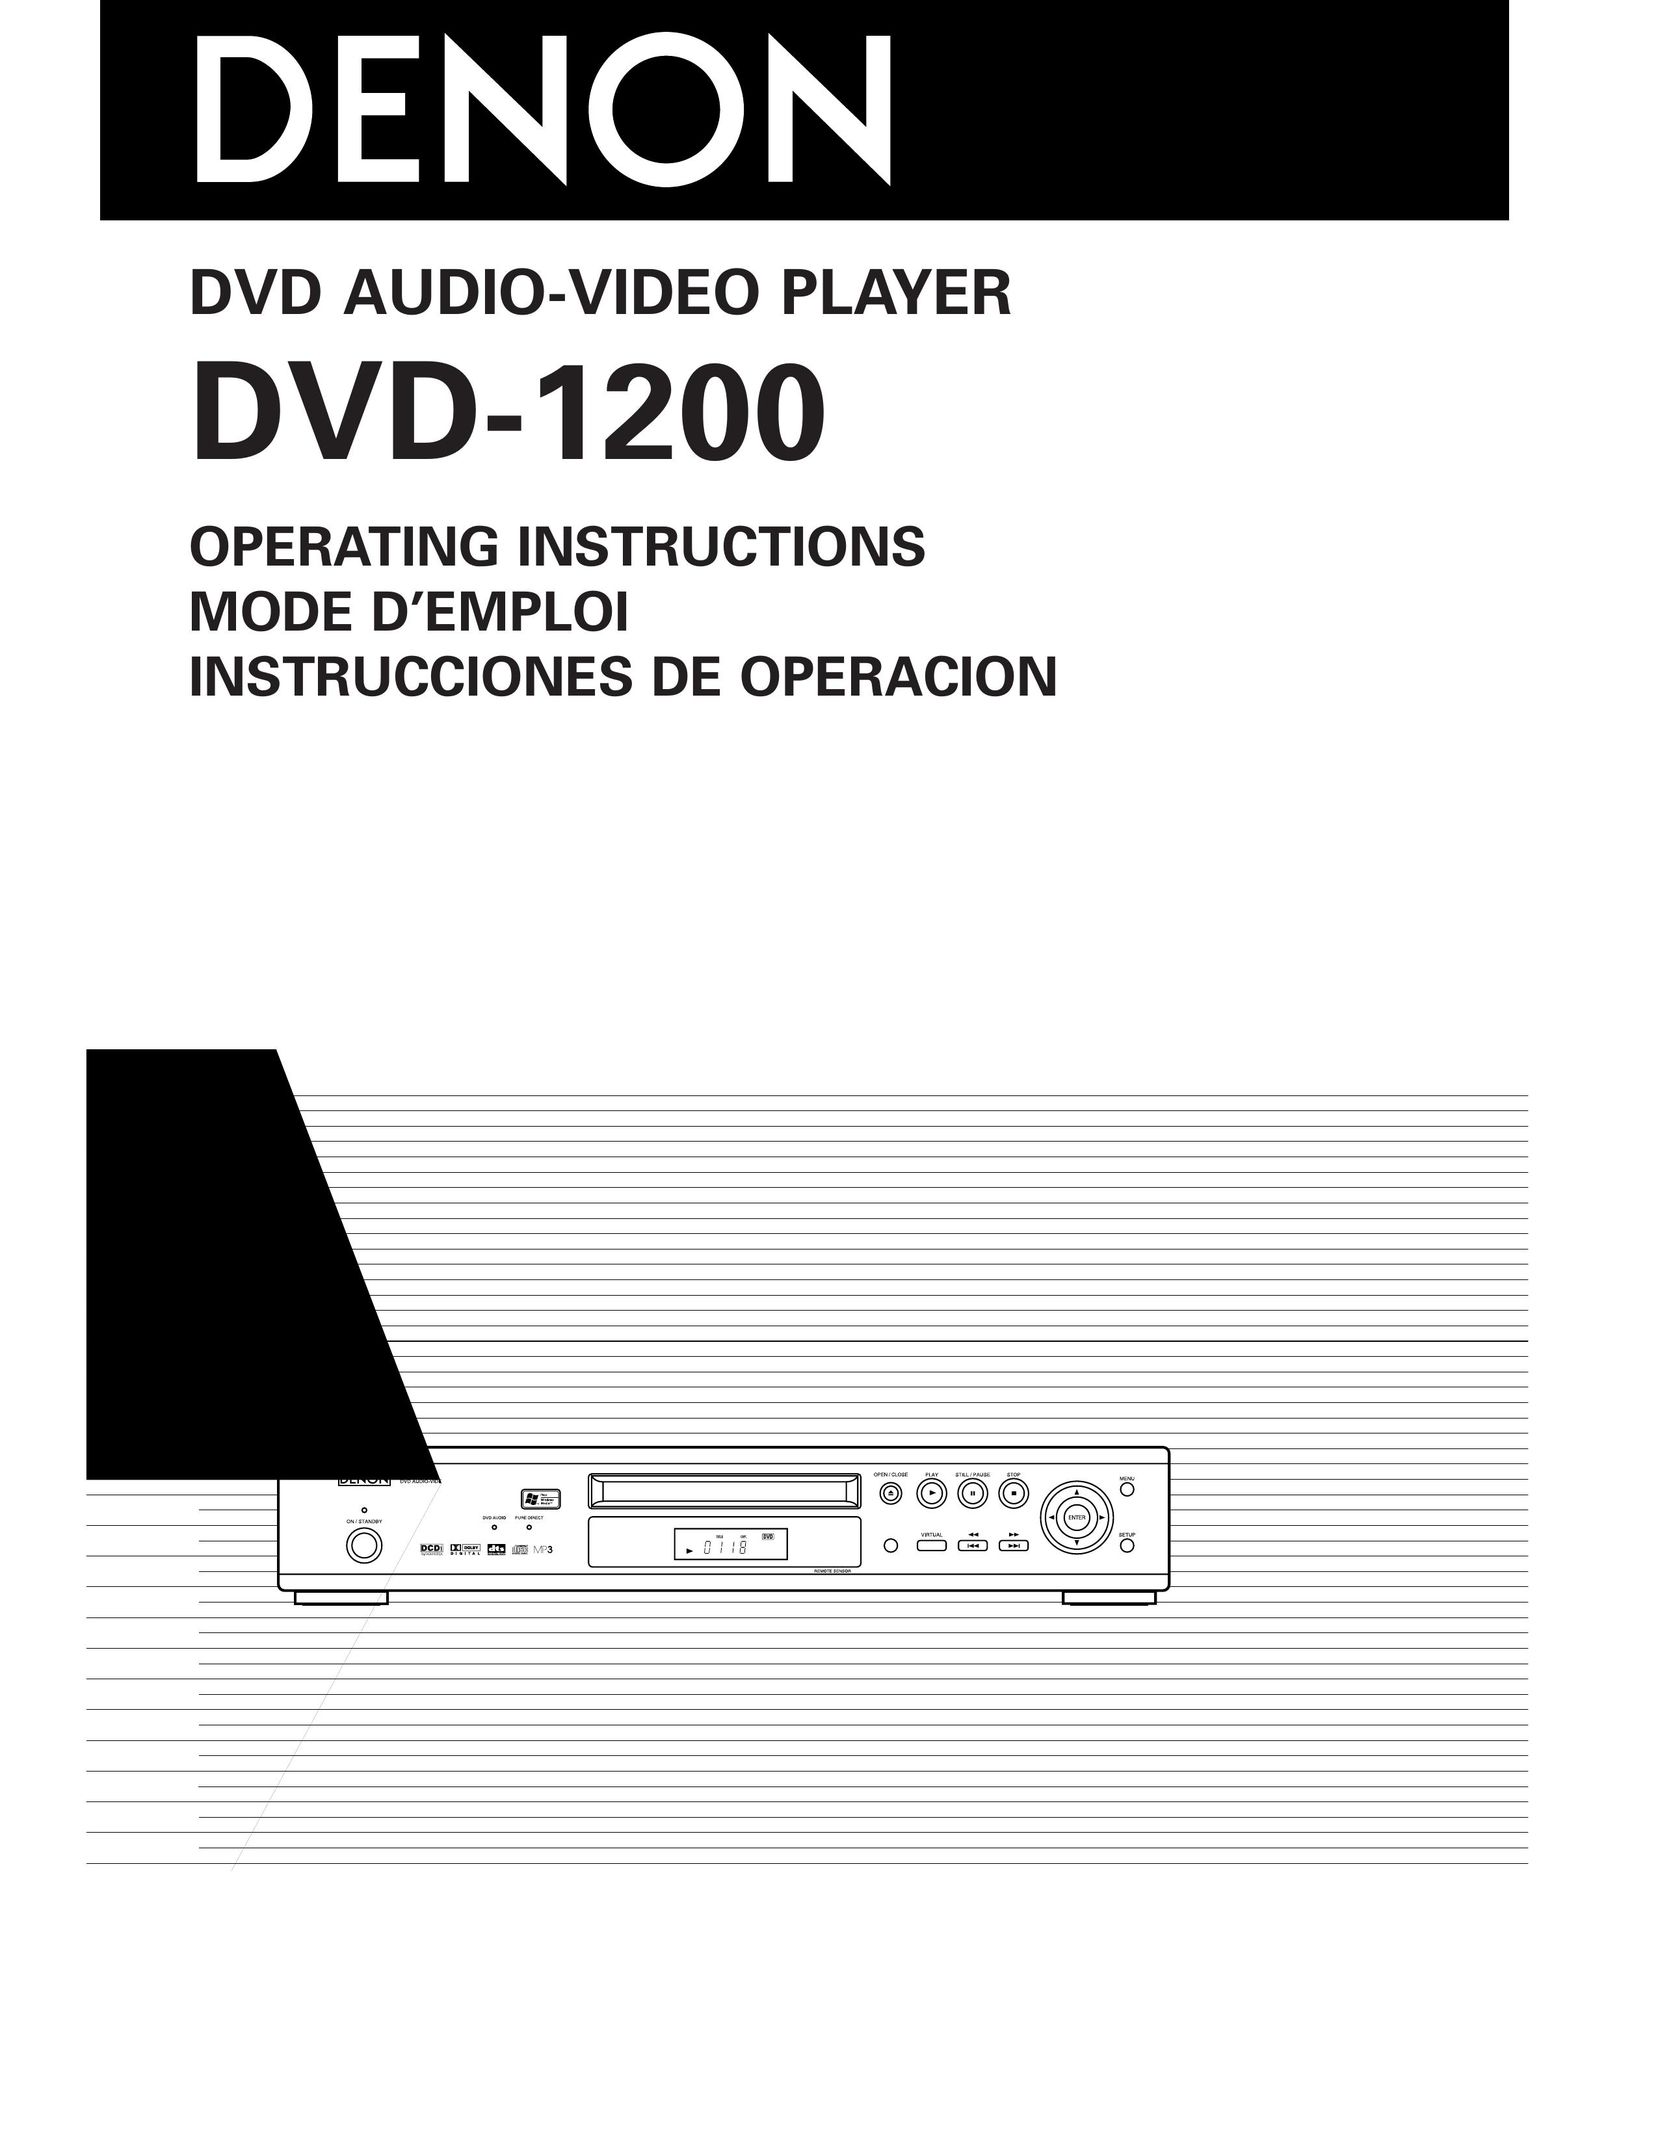 Denon DVD-1200 DVD Player User Manual